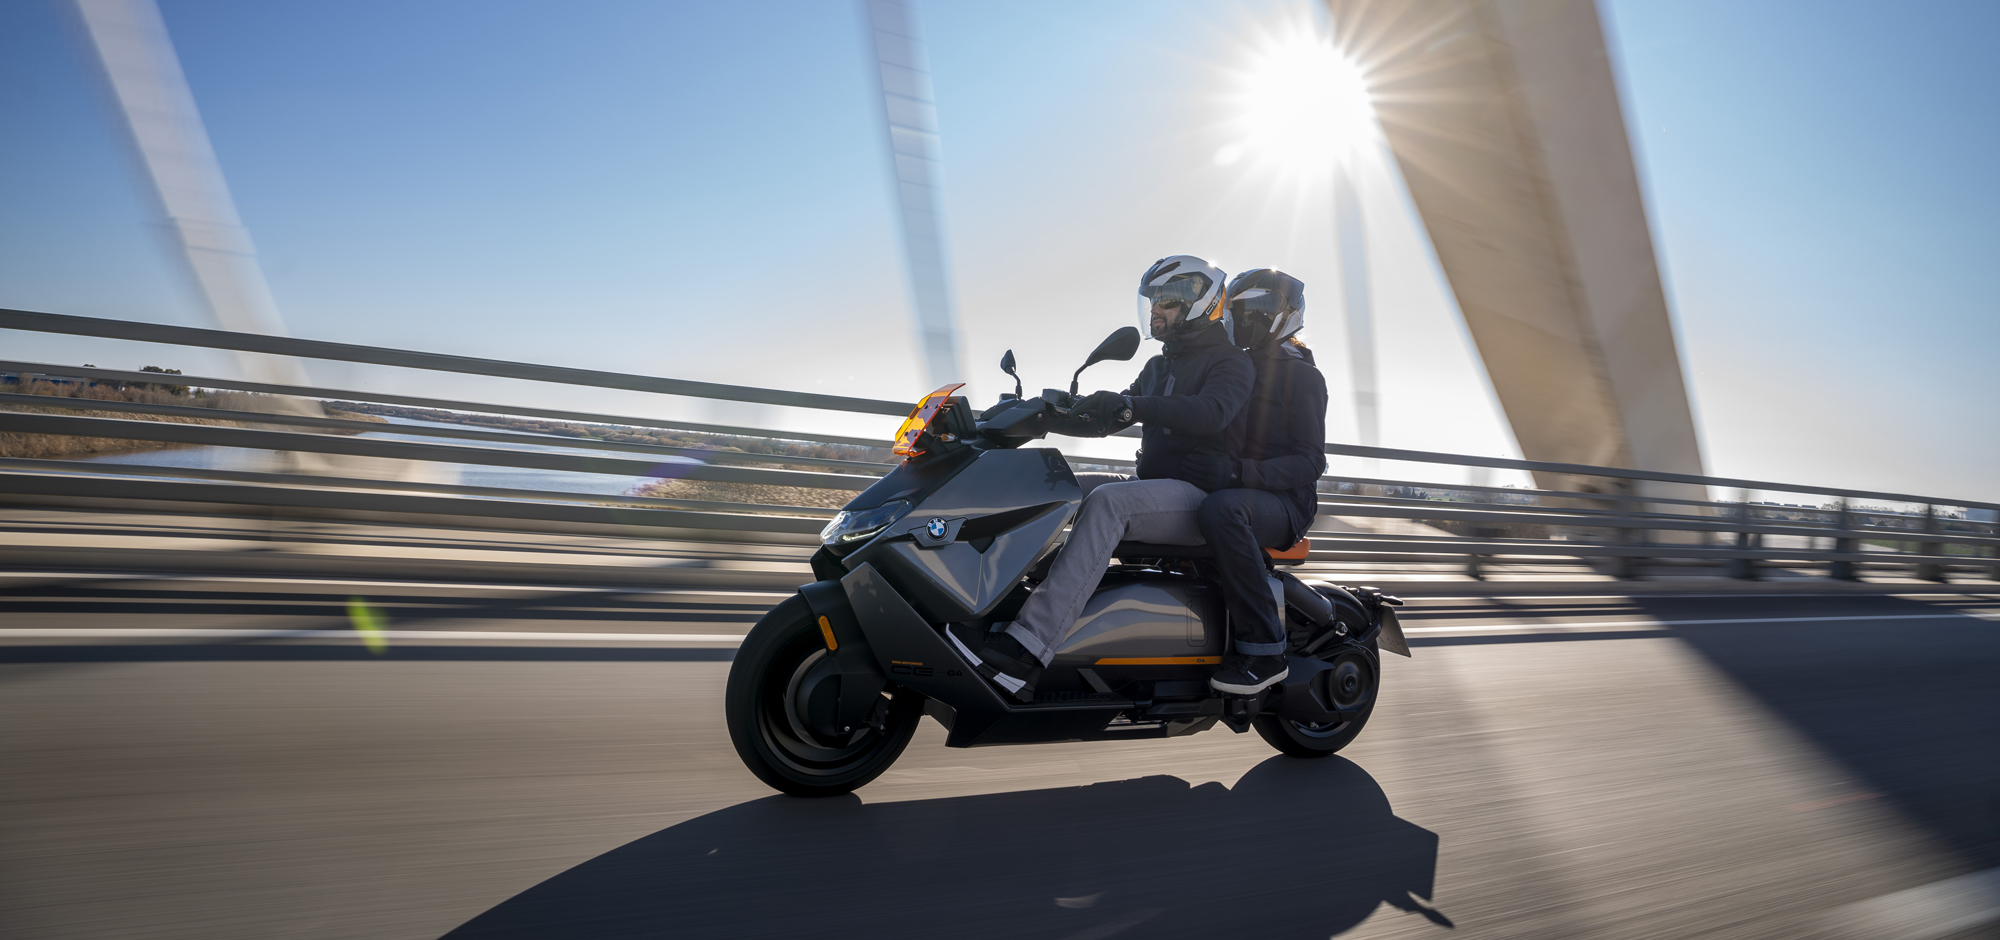 BMW Urban mobility motorcycle with passenger riding across bridge